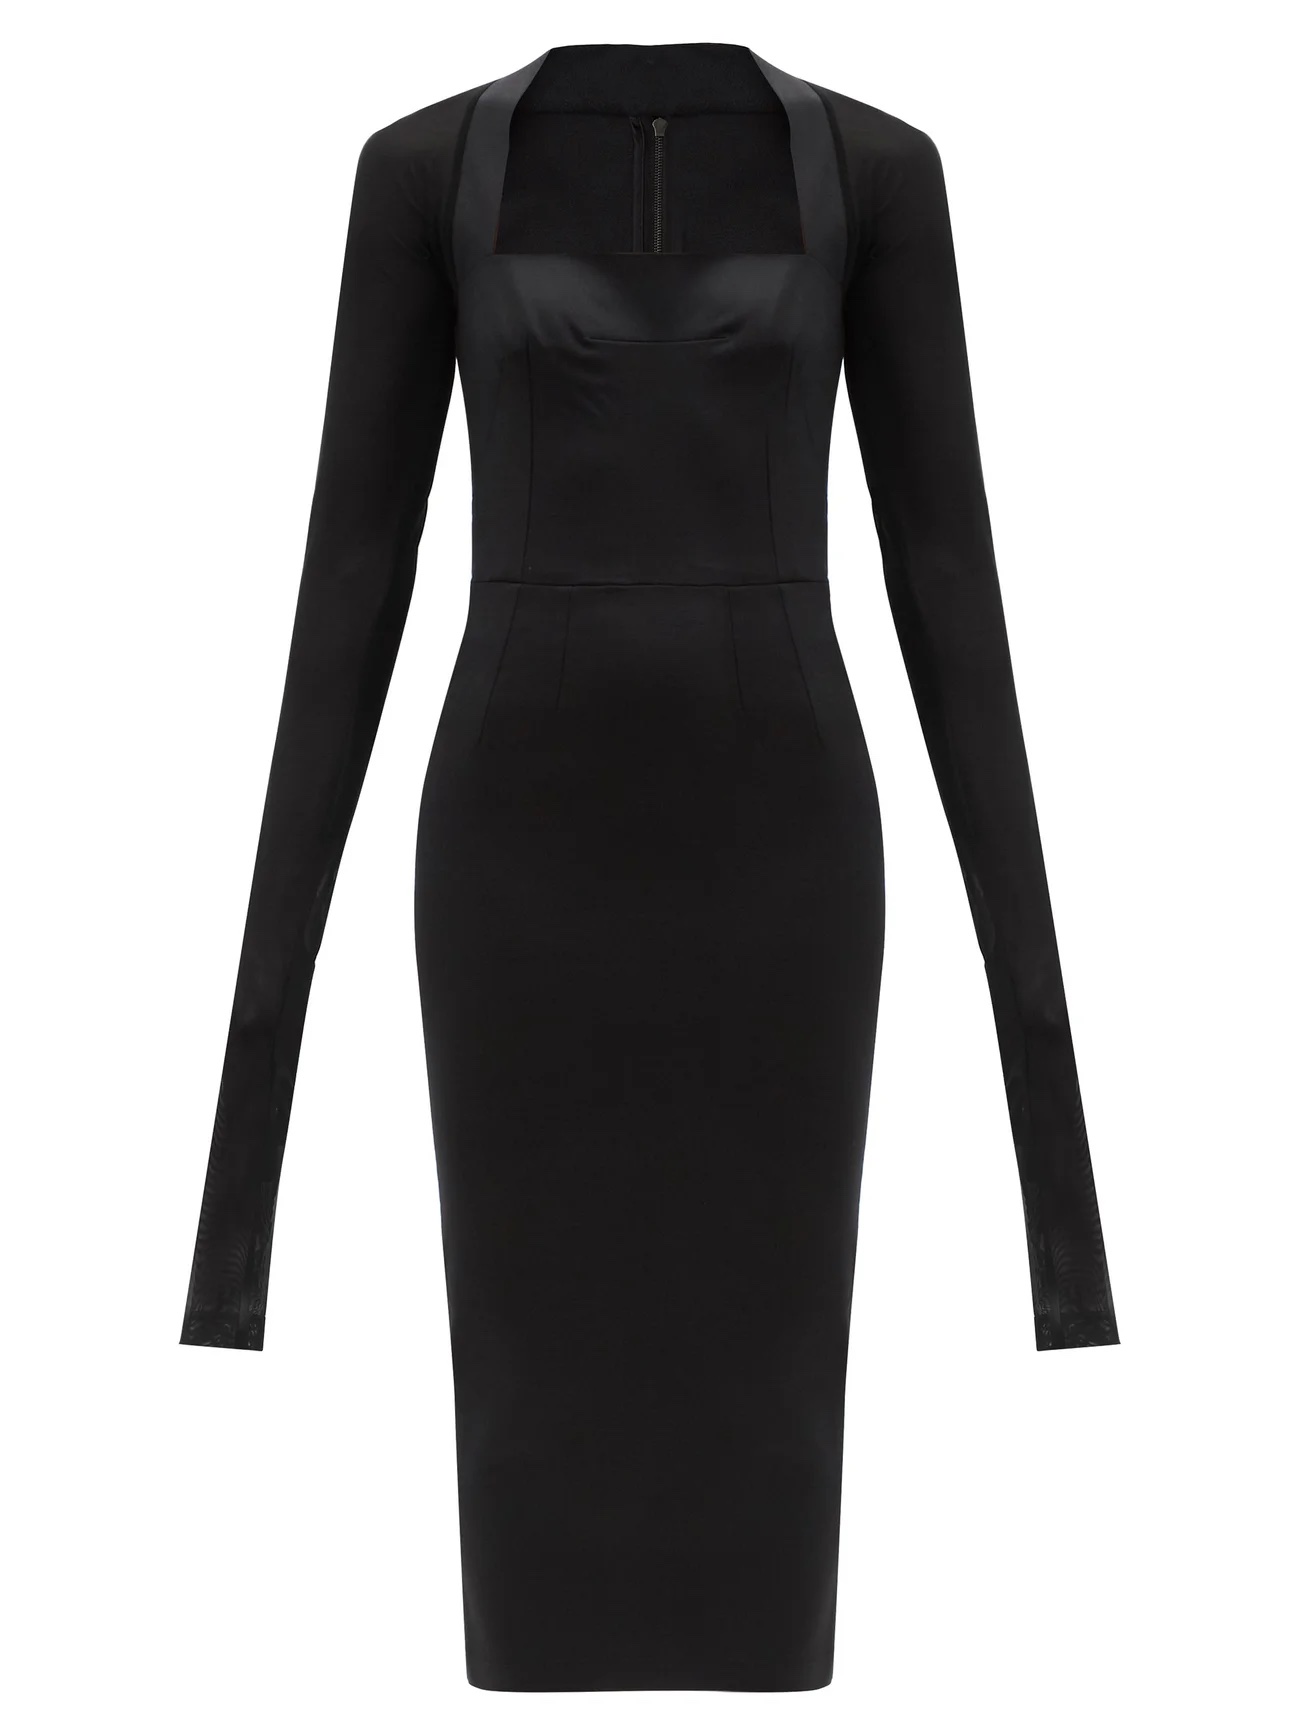 Black Dress Halloween Costume: Costumes That Require A Black Dress